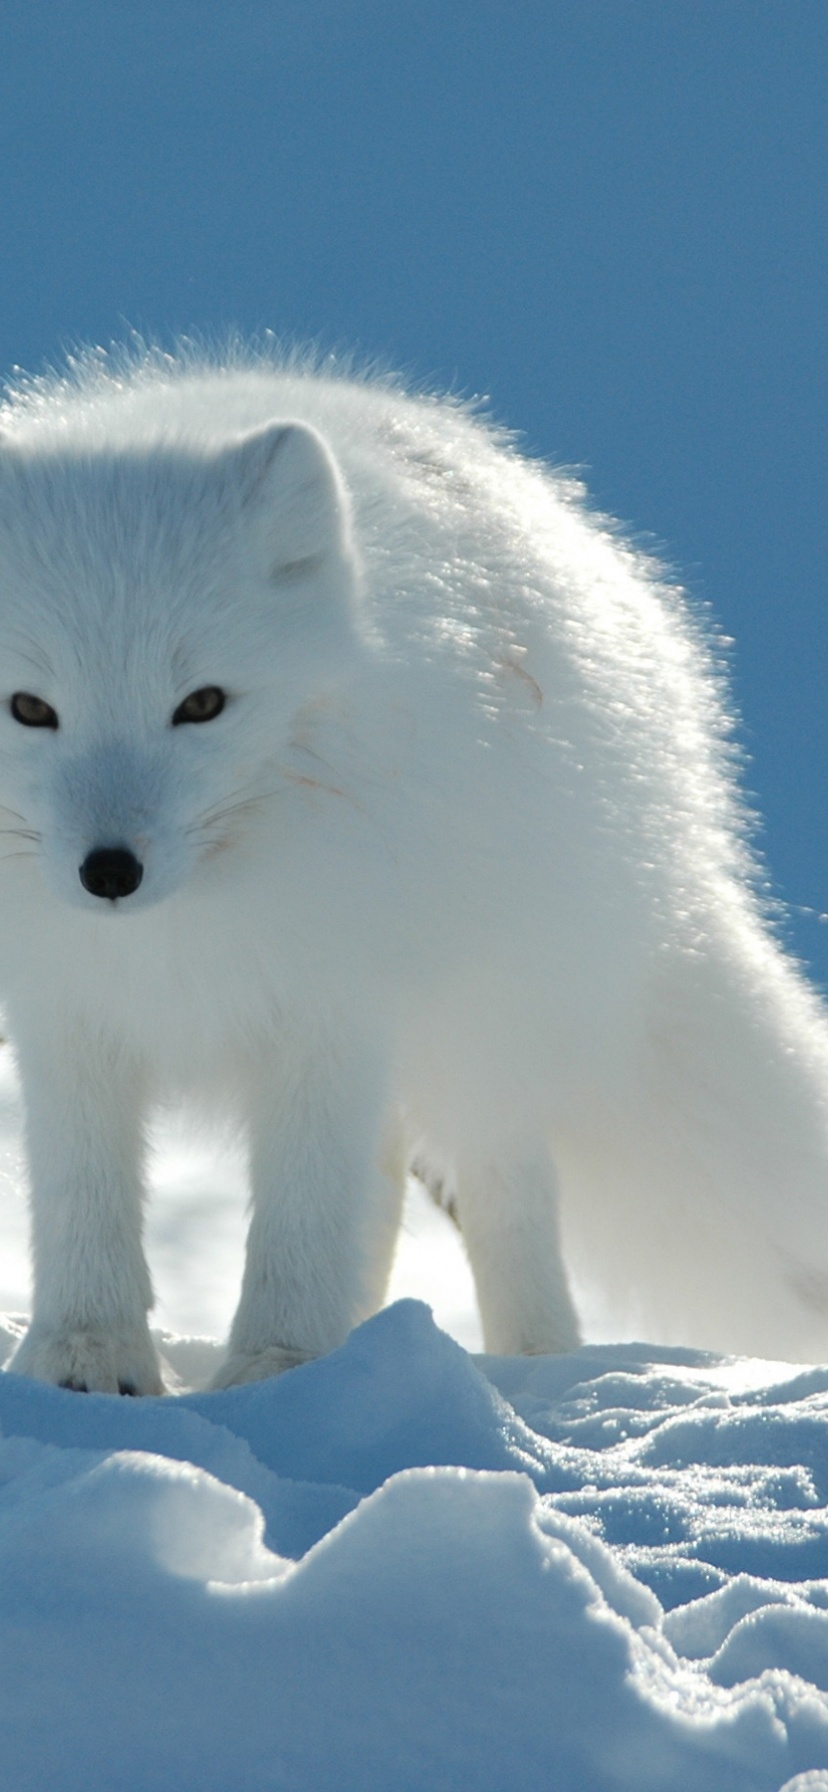 Arctic Fox In The Snow